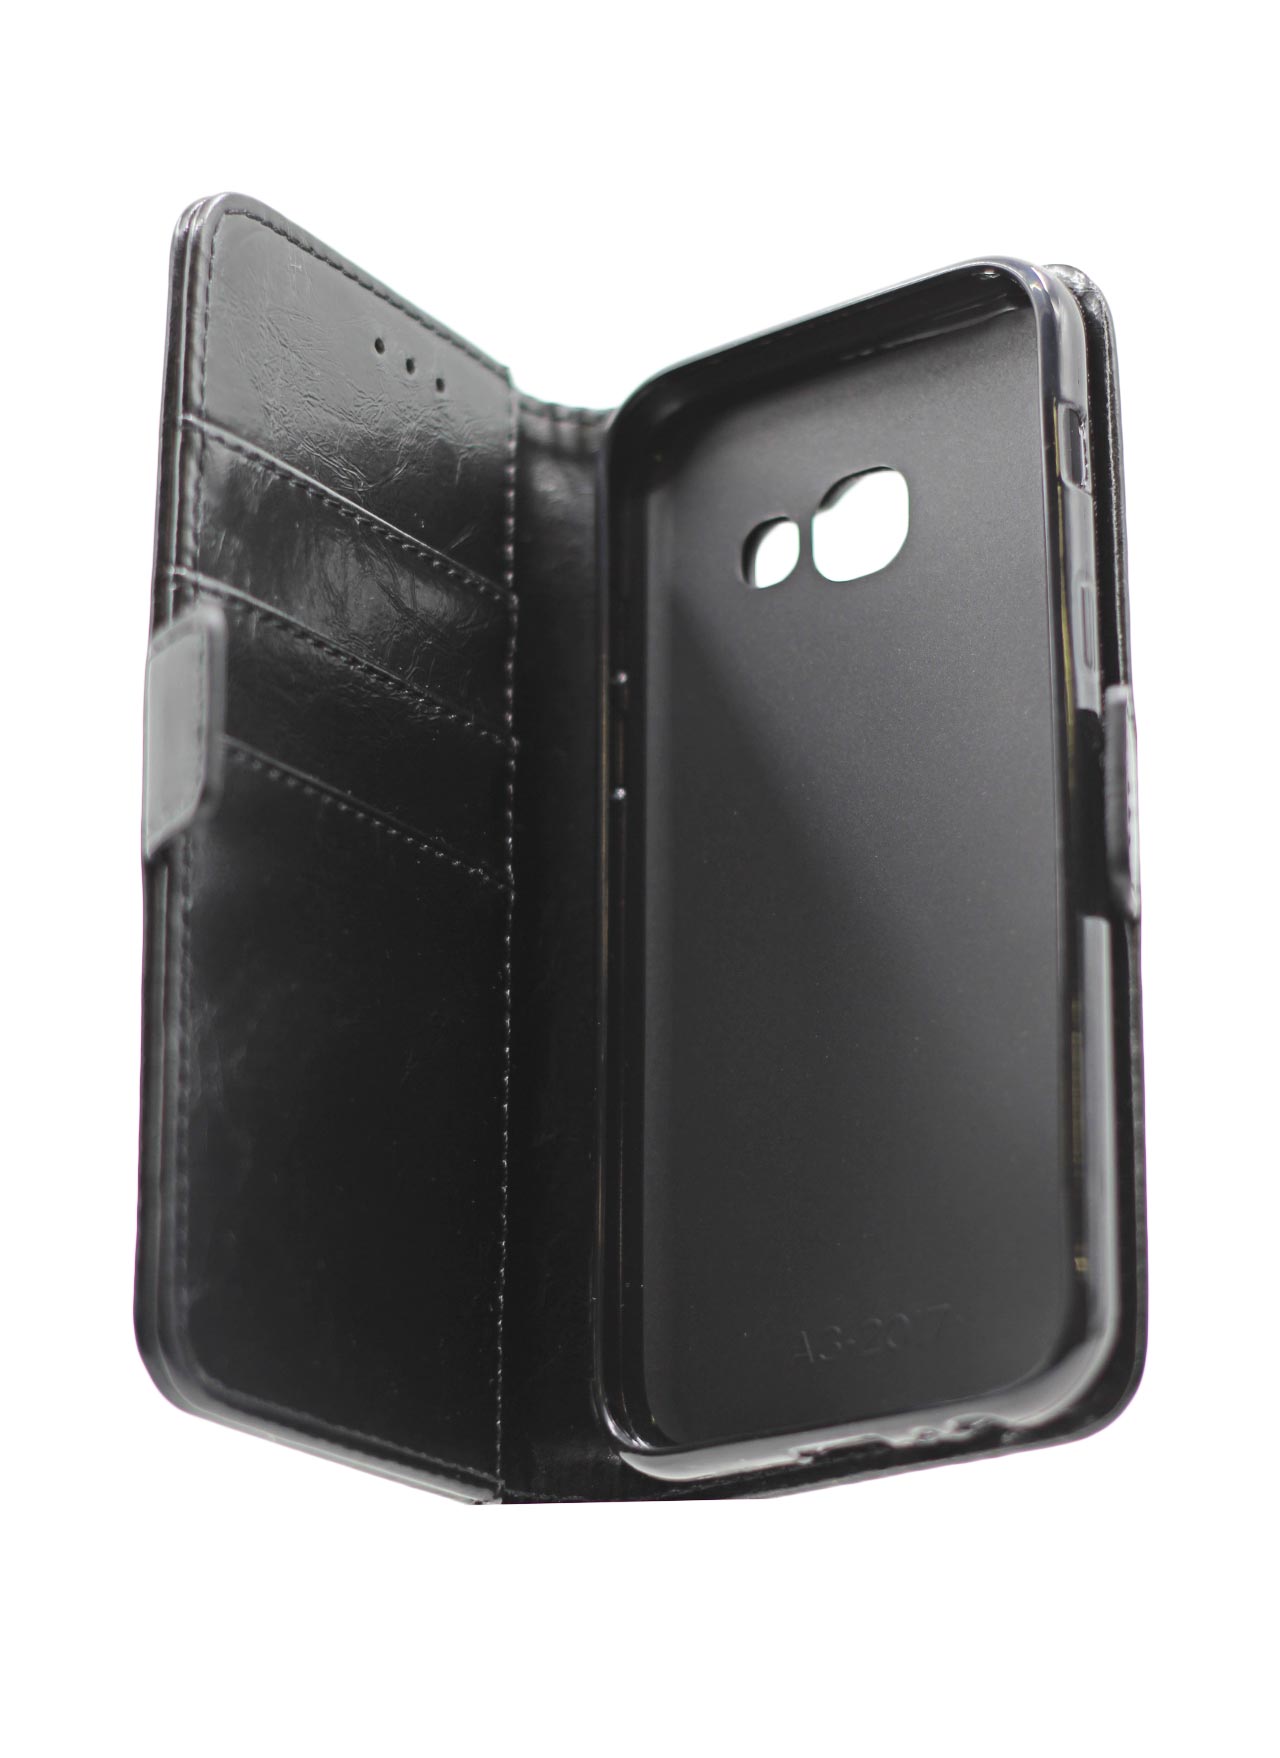 Samsung A3 2017 Leather Wallet Case Black